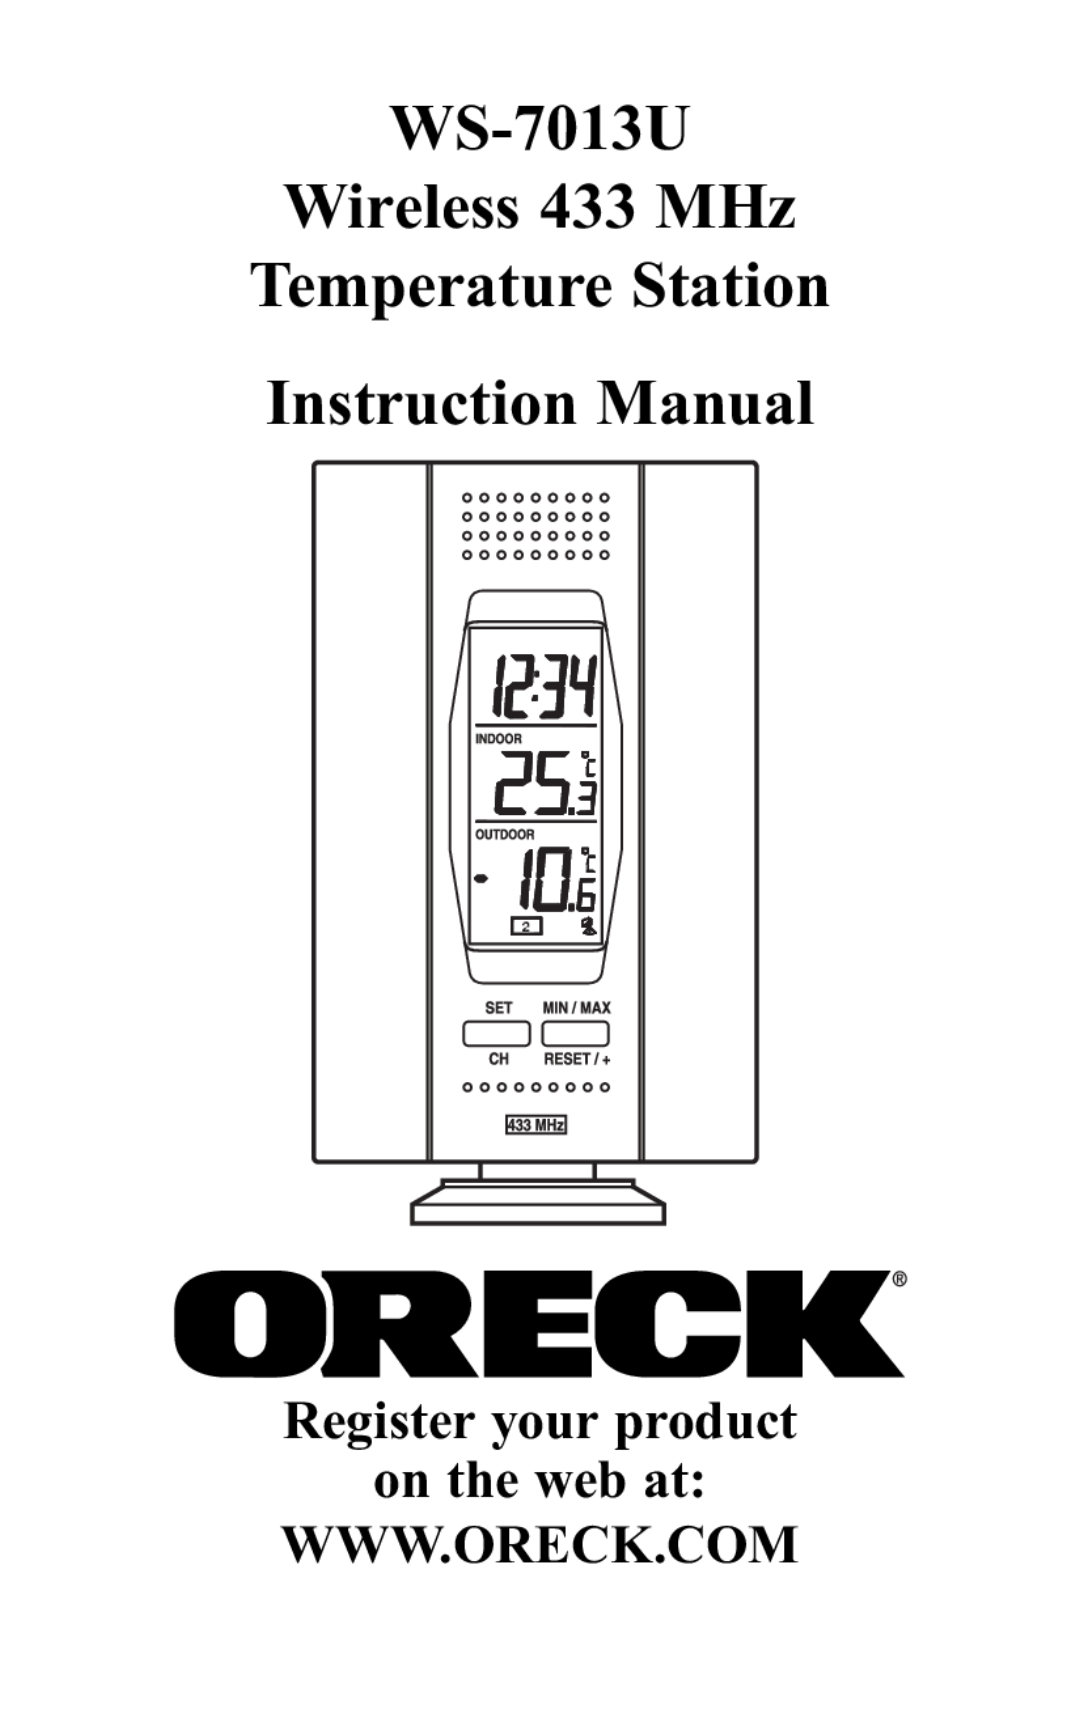 Oreck instruction manual WS-7013U Wireless 433 MHz Temperature Station Instruction Manual 